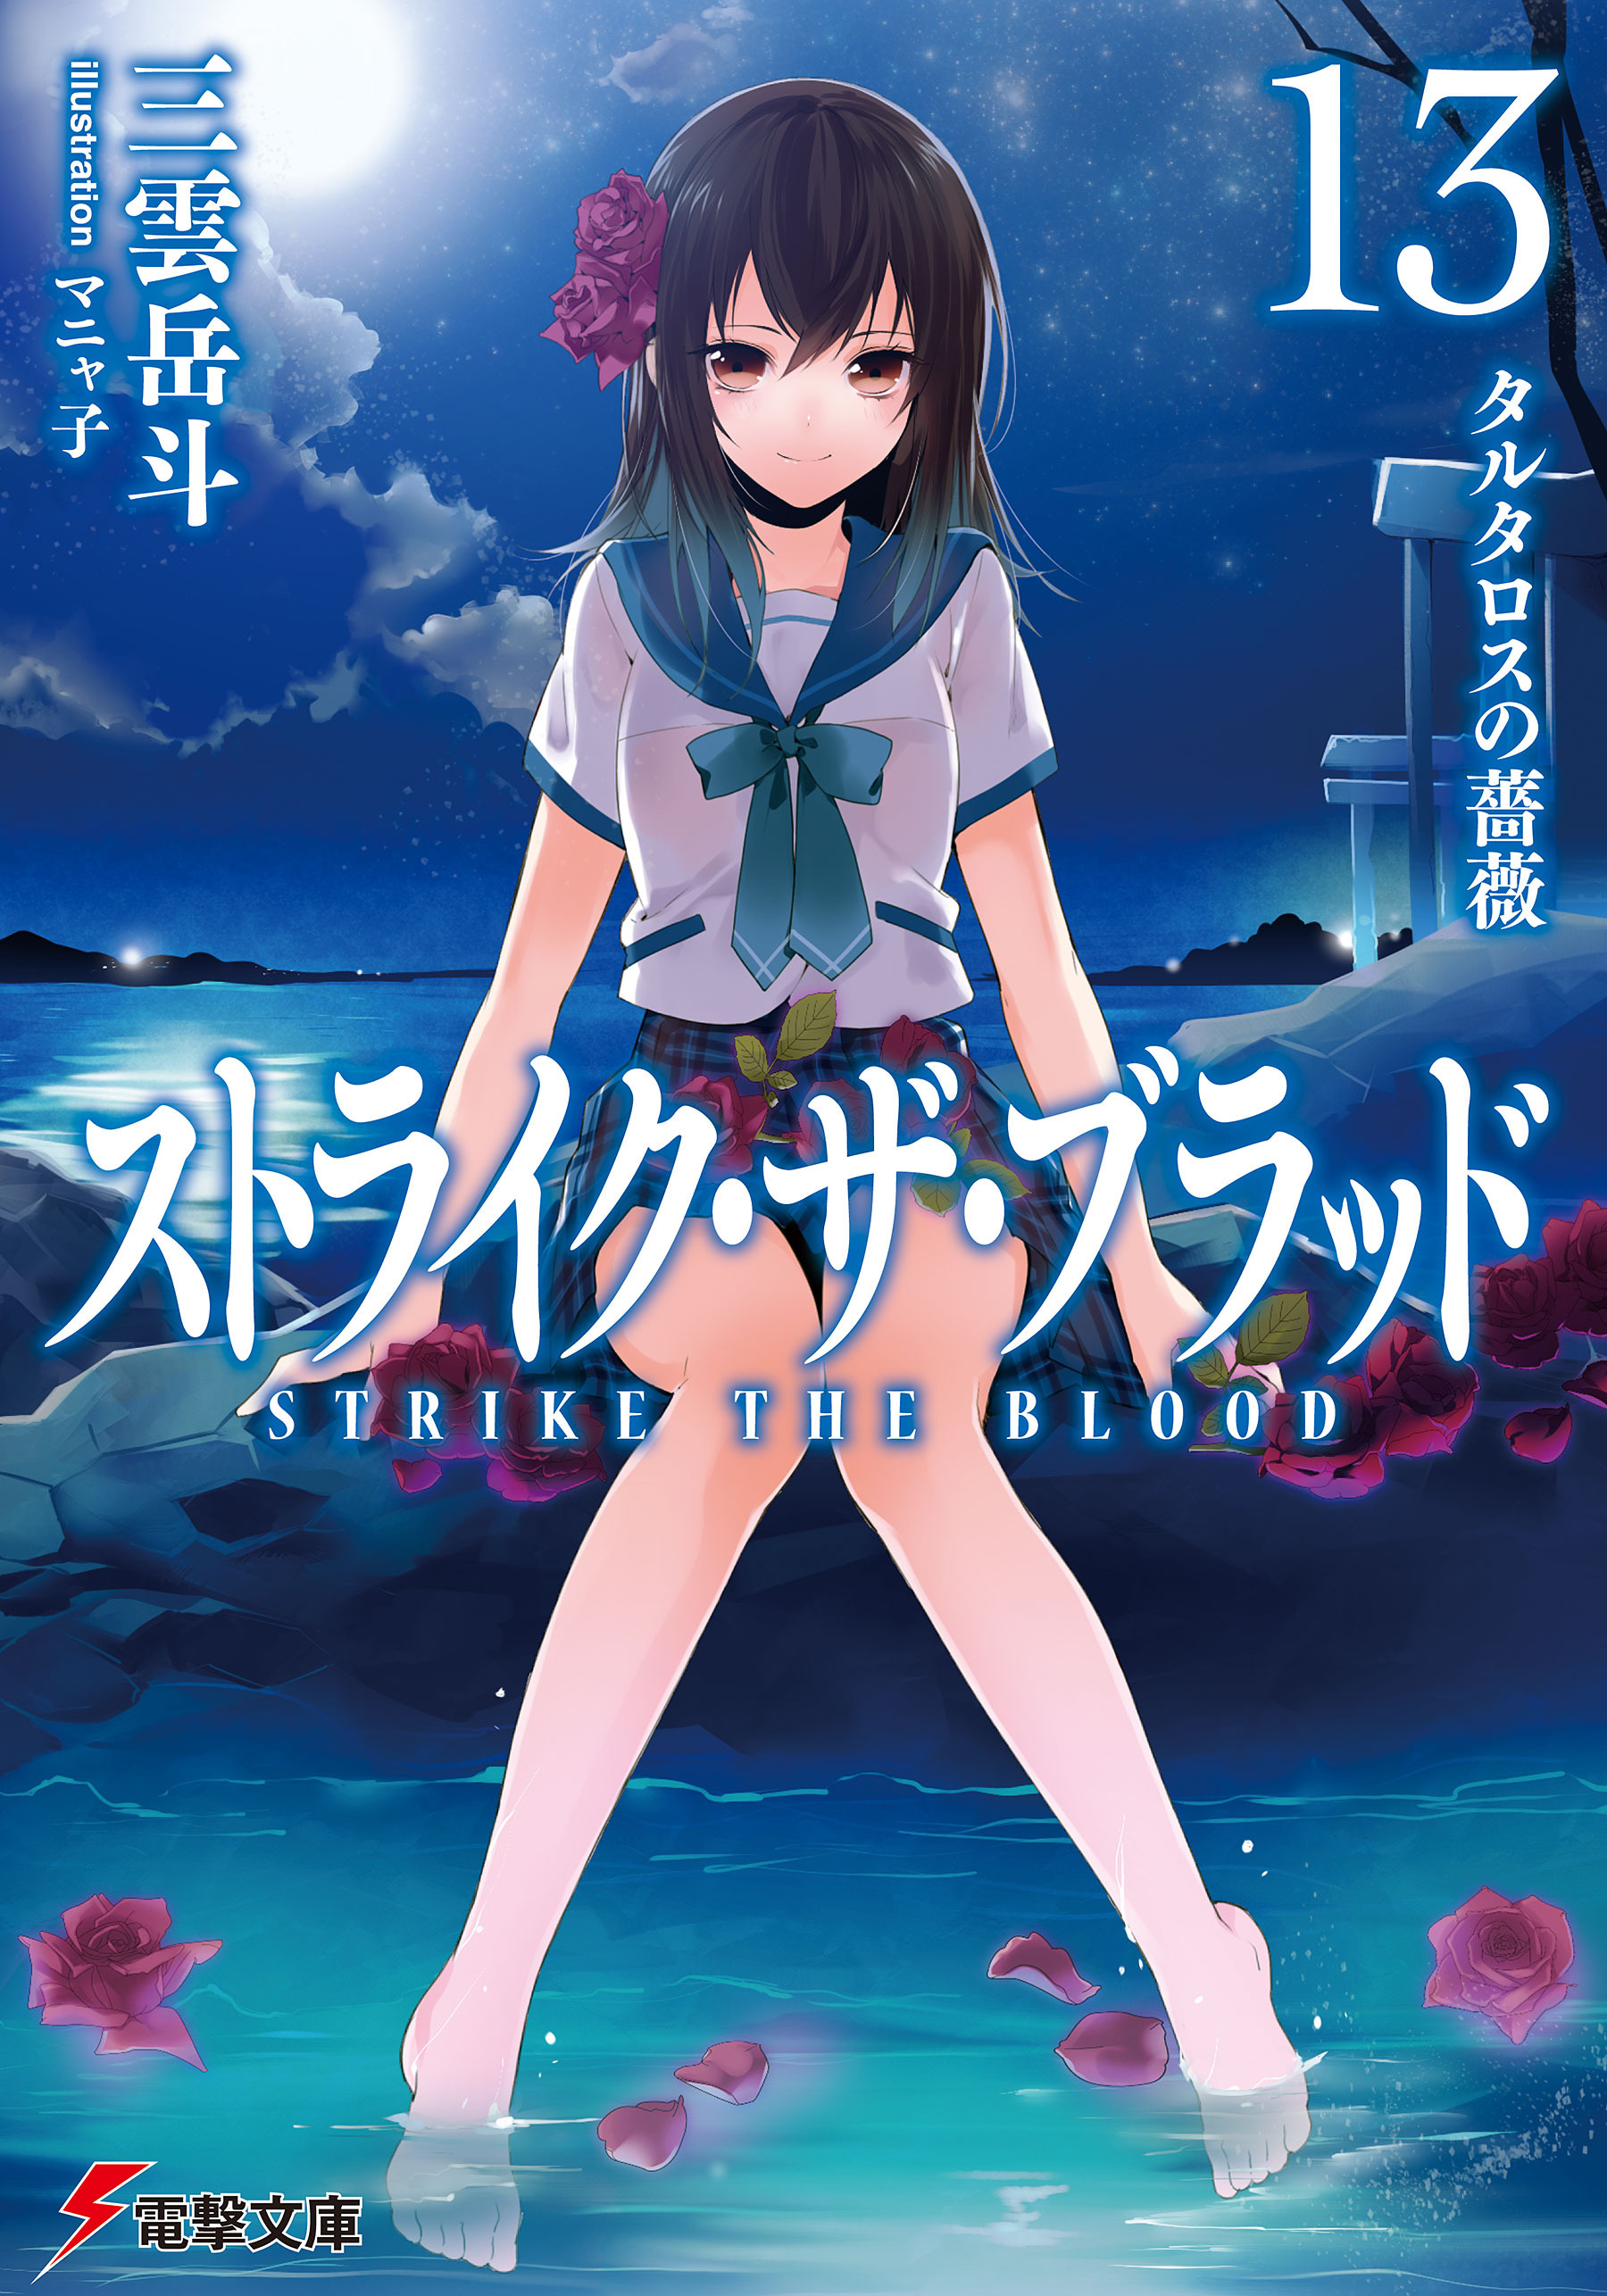 Light Novel Volume 12, Strike The Blood Wiki, Fandom